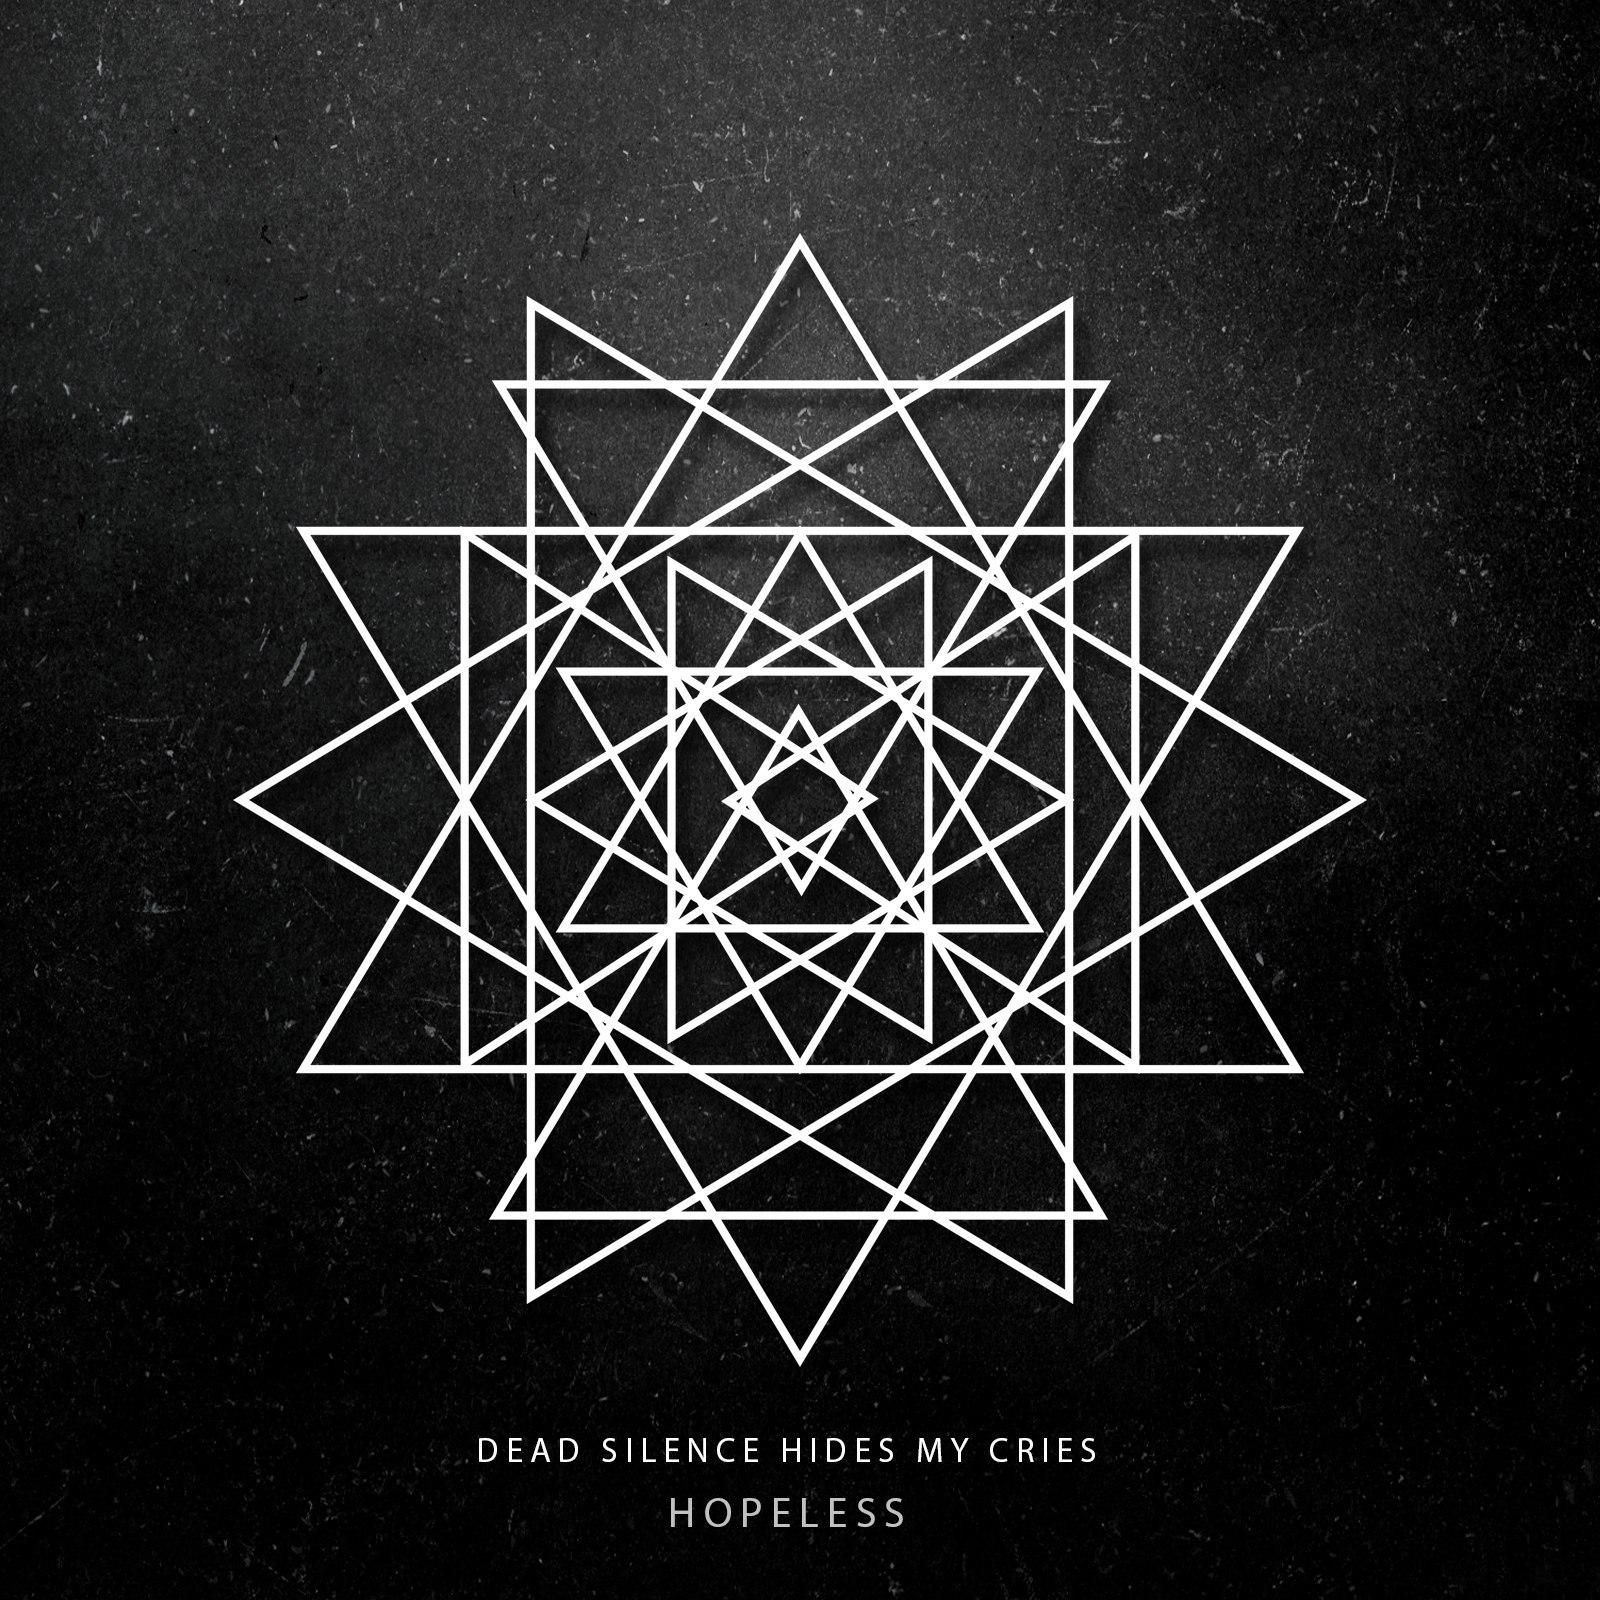 Dead Silence Hides My Cries - Hopeless [Single] (2016) Album Info